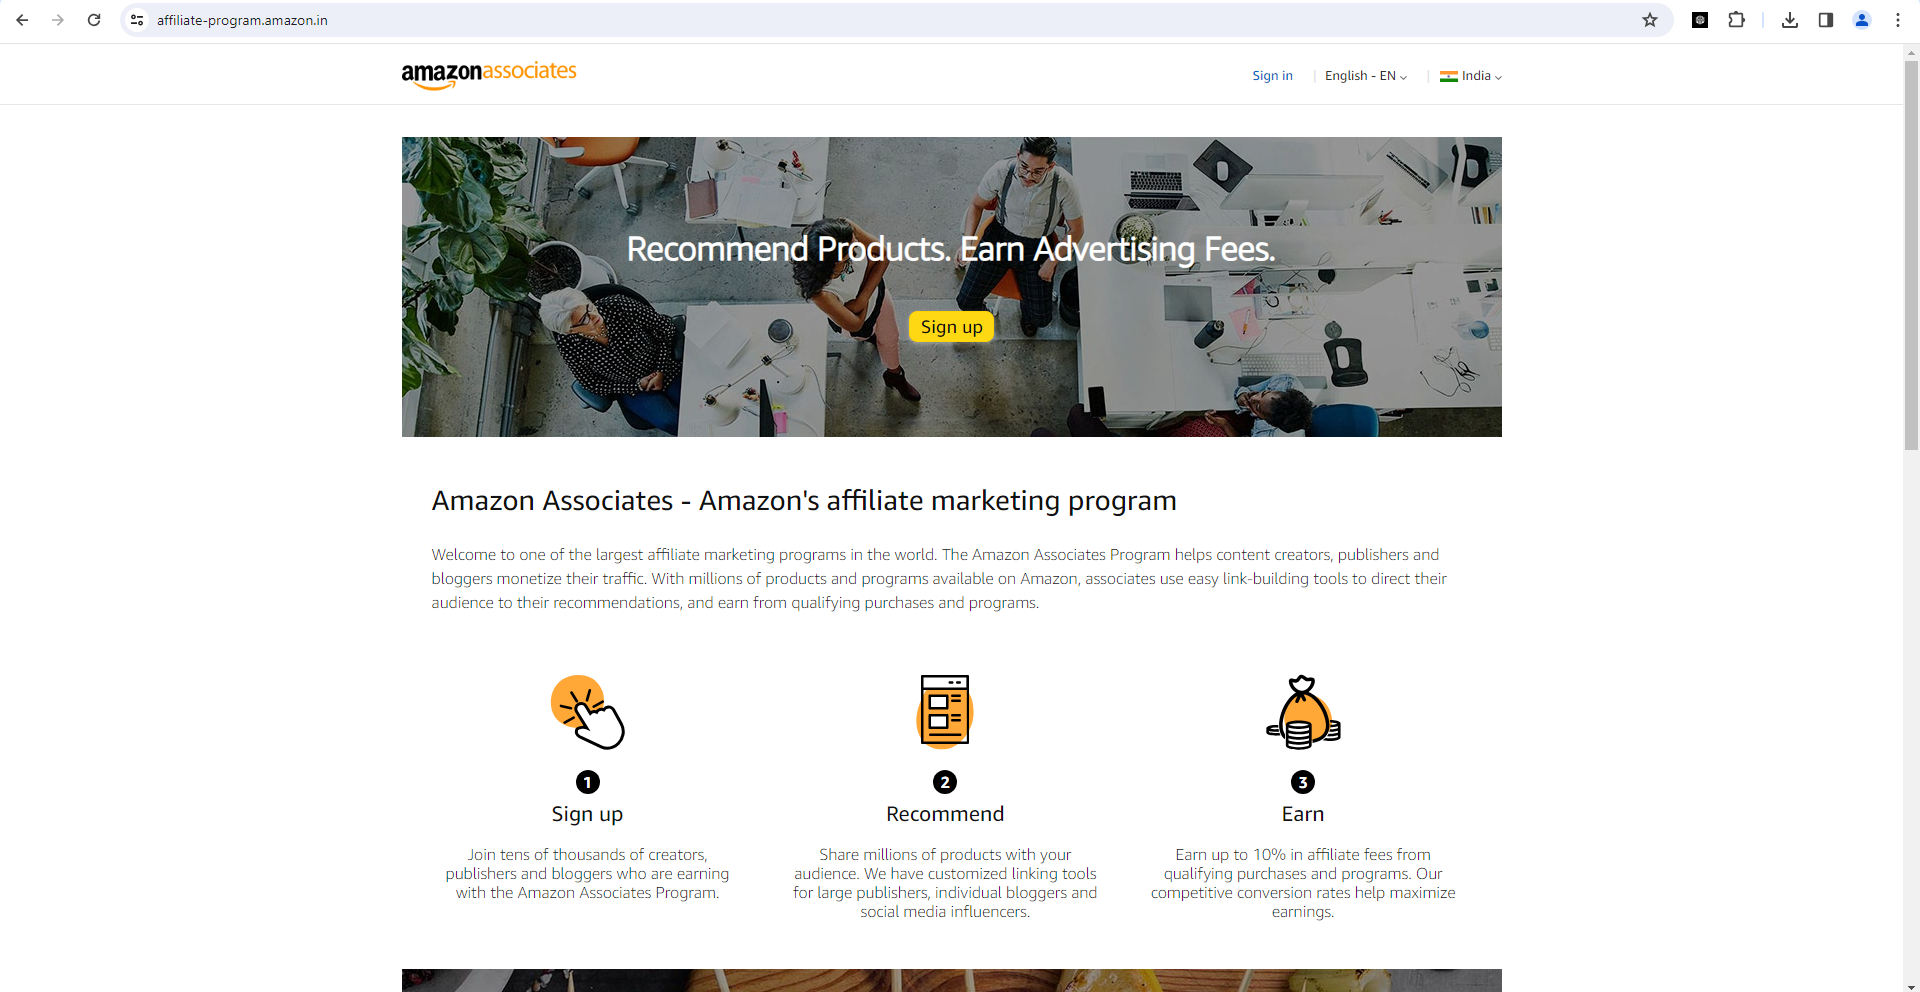 Amazon Associates: Monetizing Your Online Presence